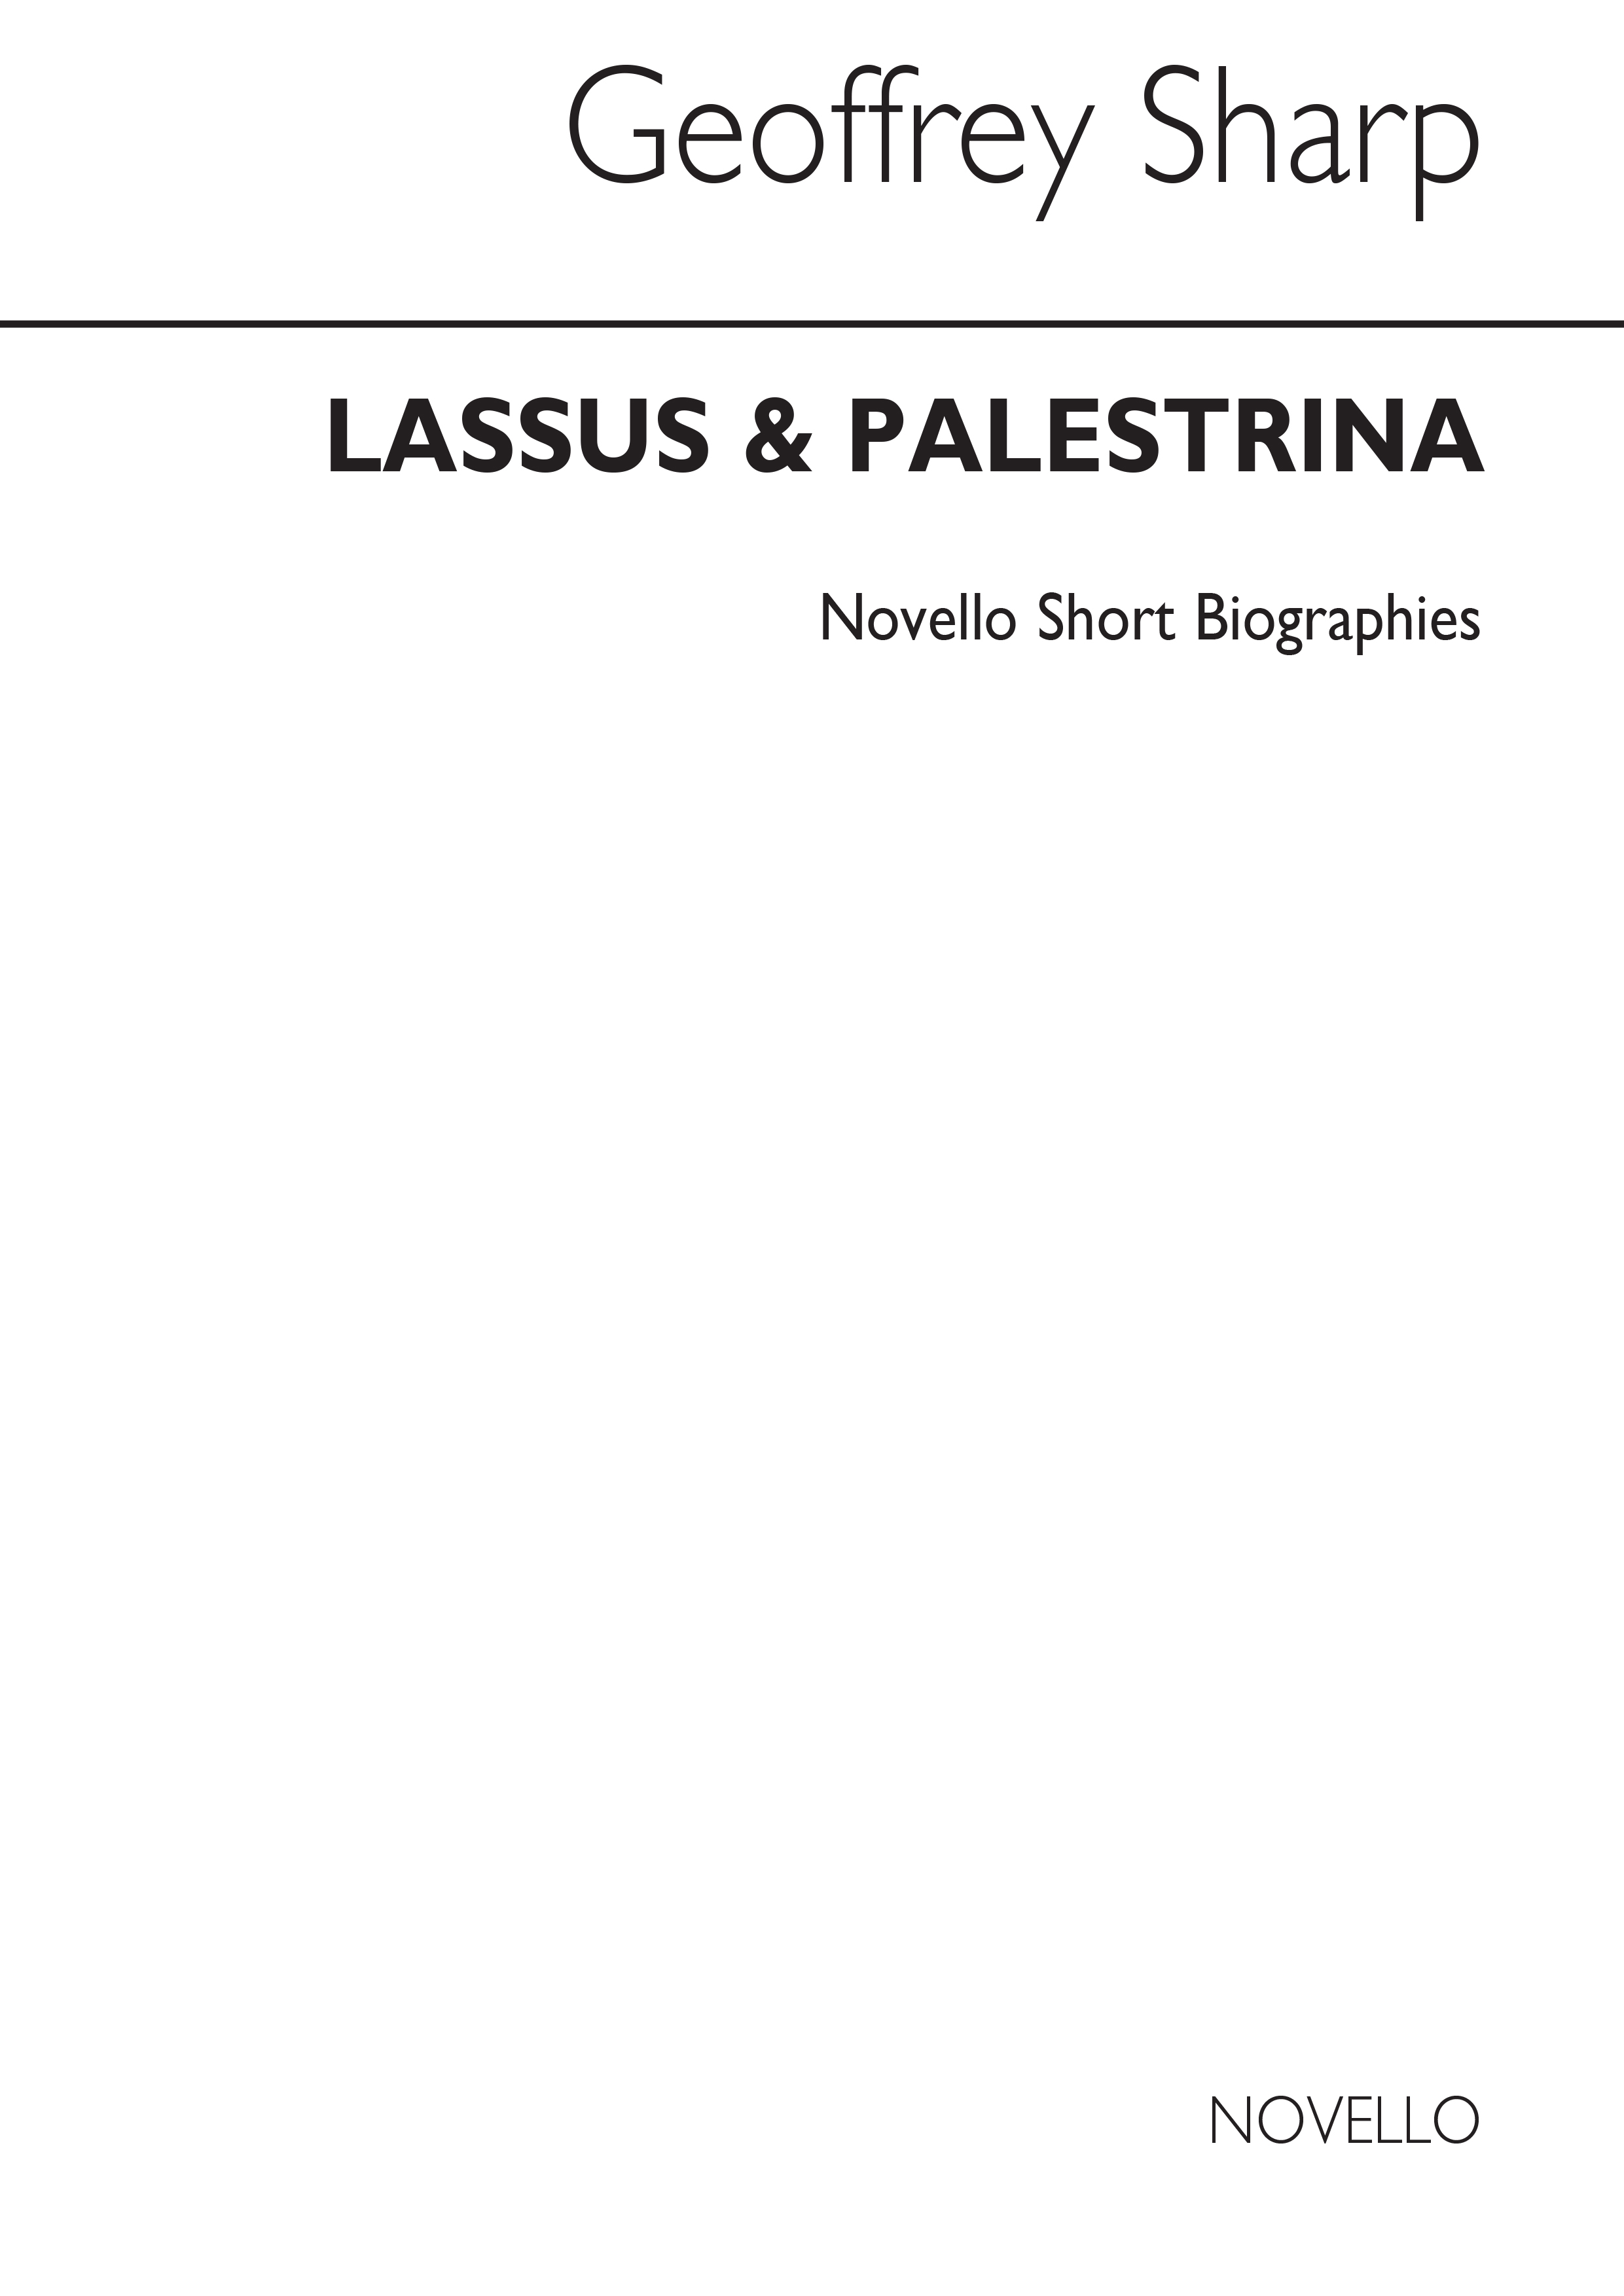 Geoffrey Sharp: Lassus & Palestrina Biography: Biography